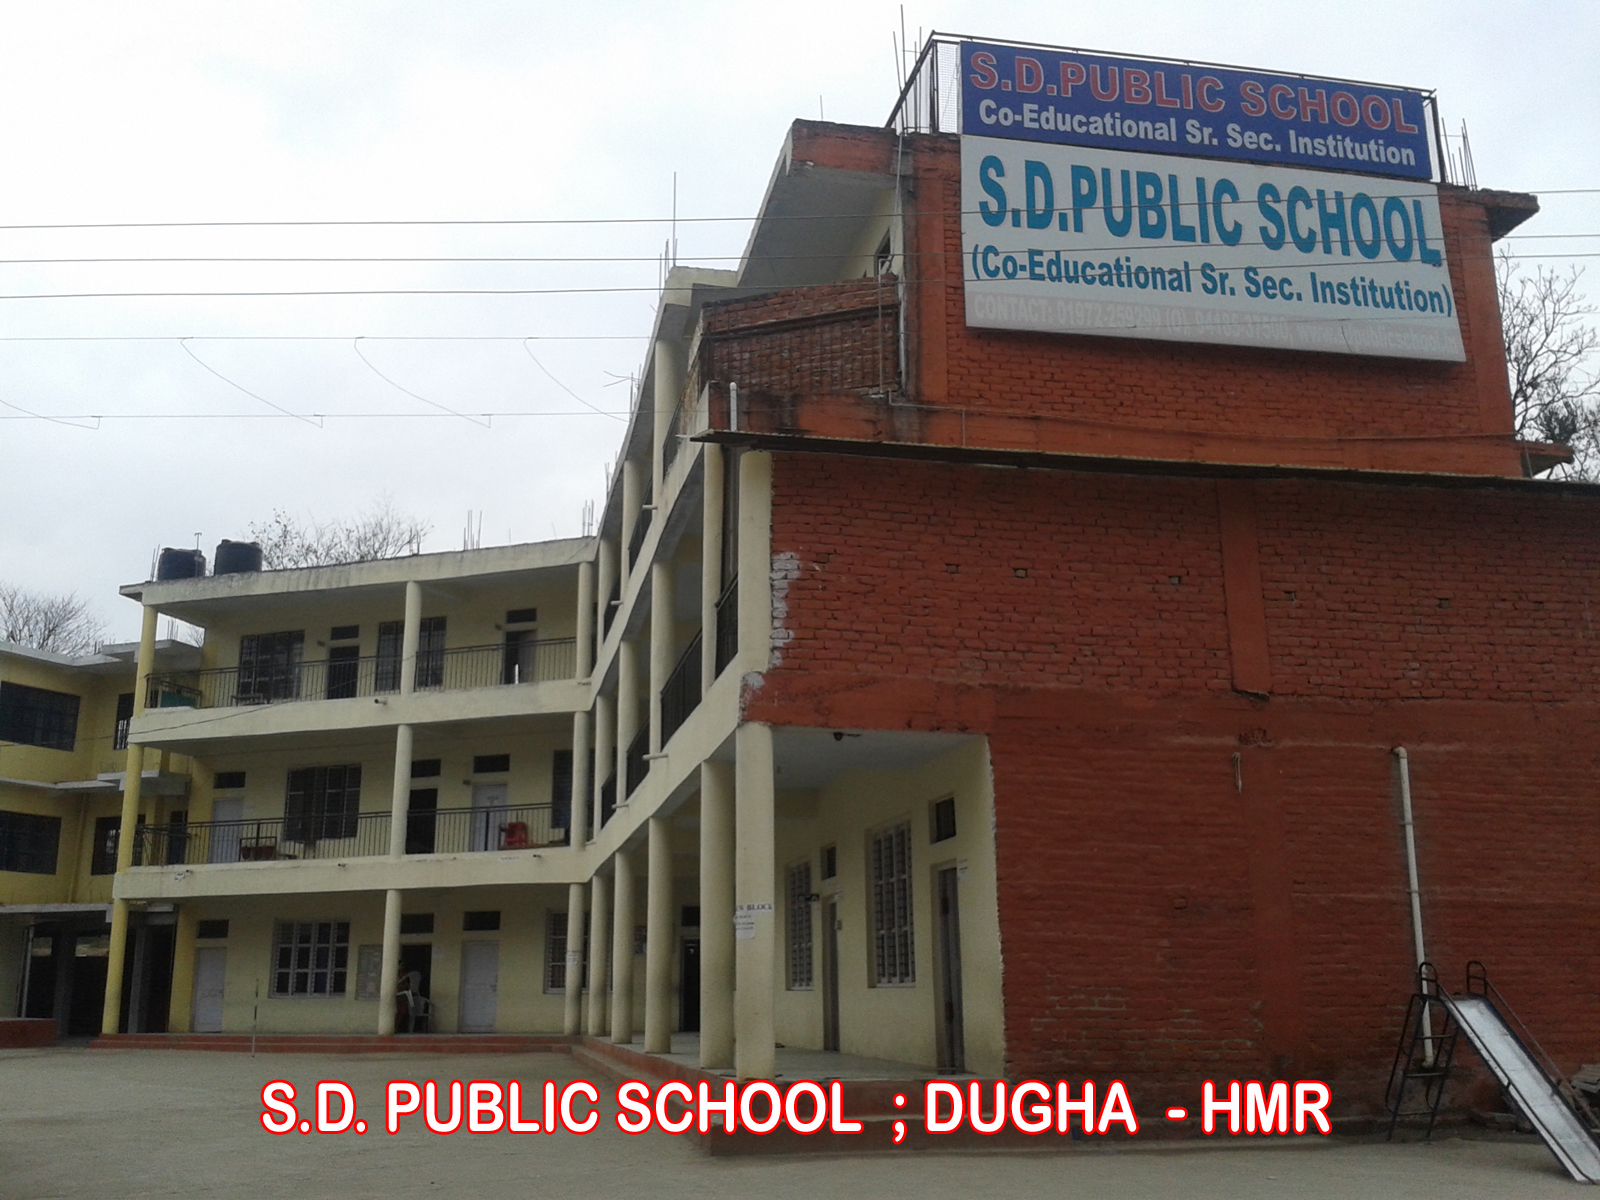 S.D. PUBLIC SCHOOL AT DUGHA